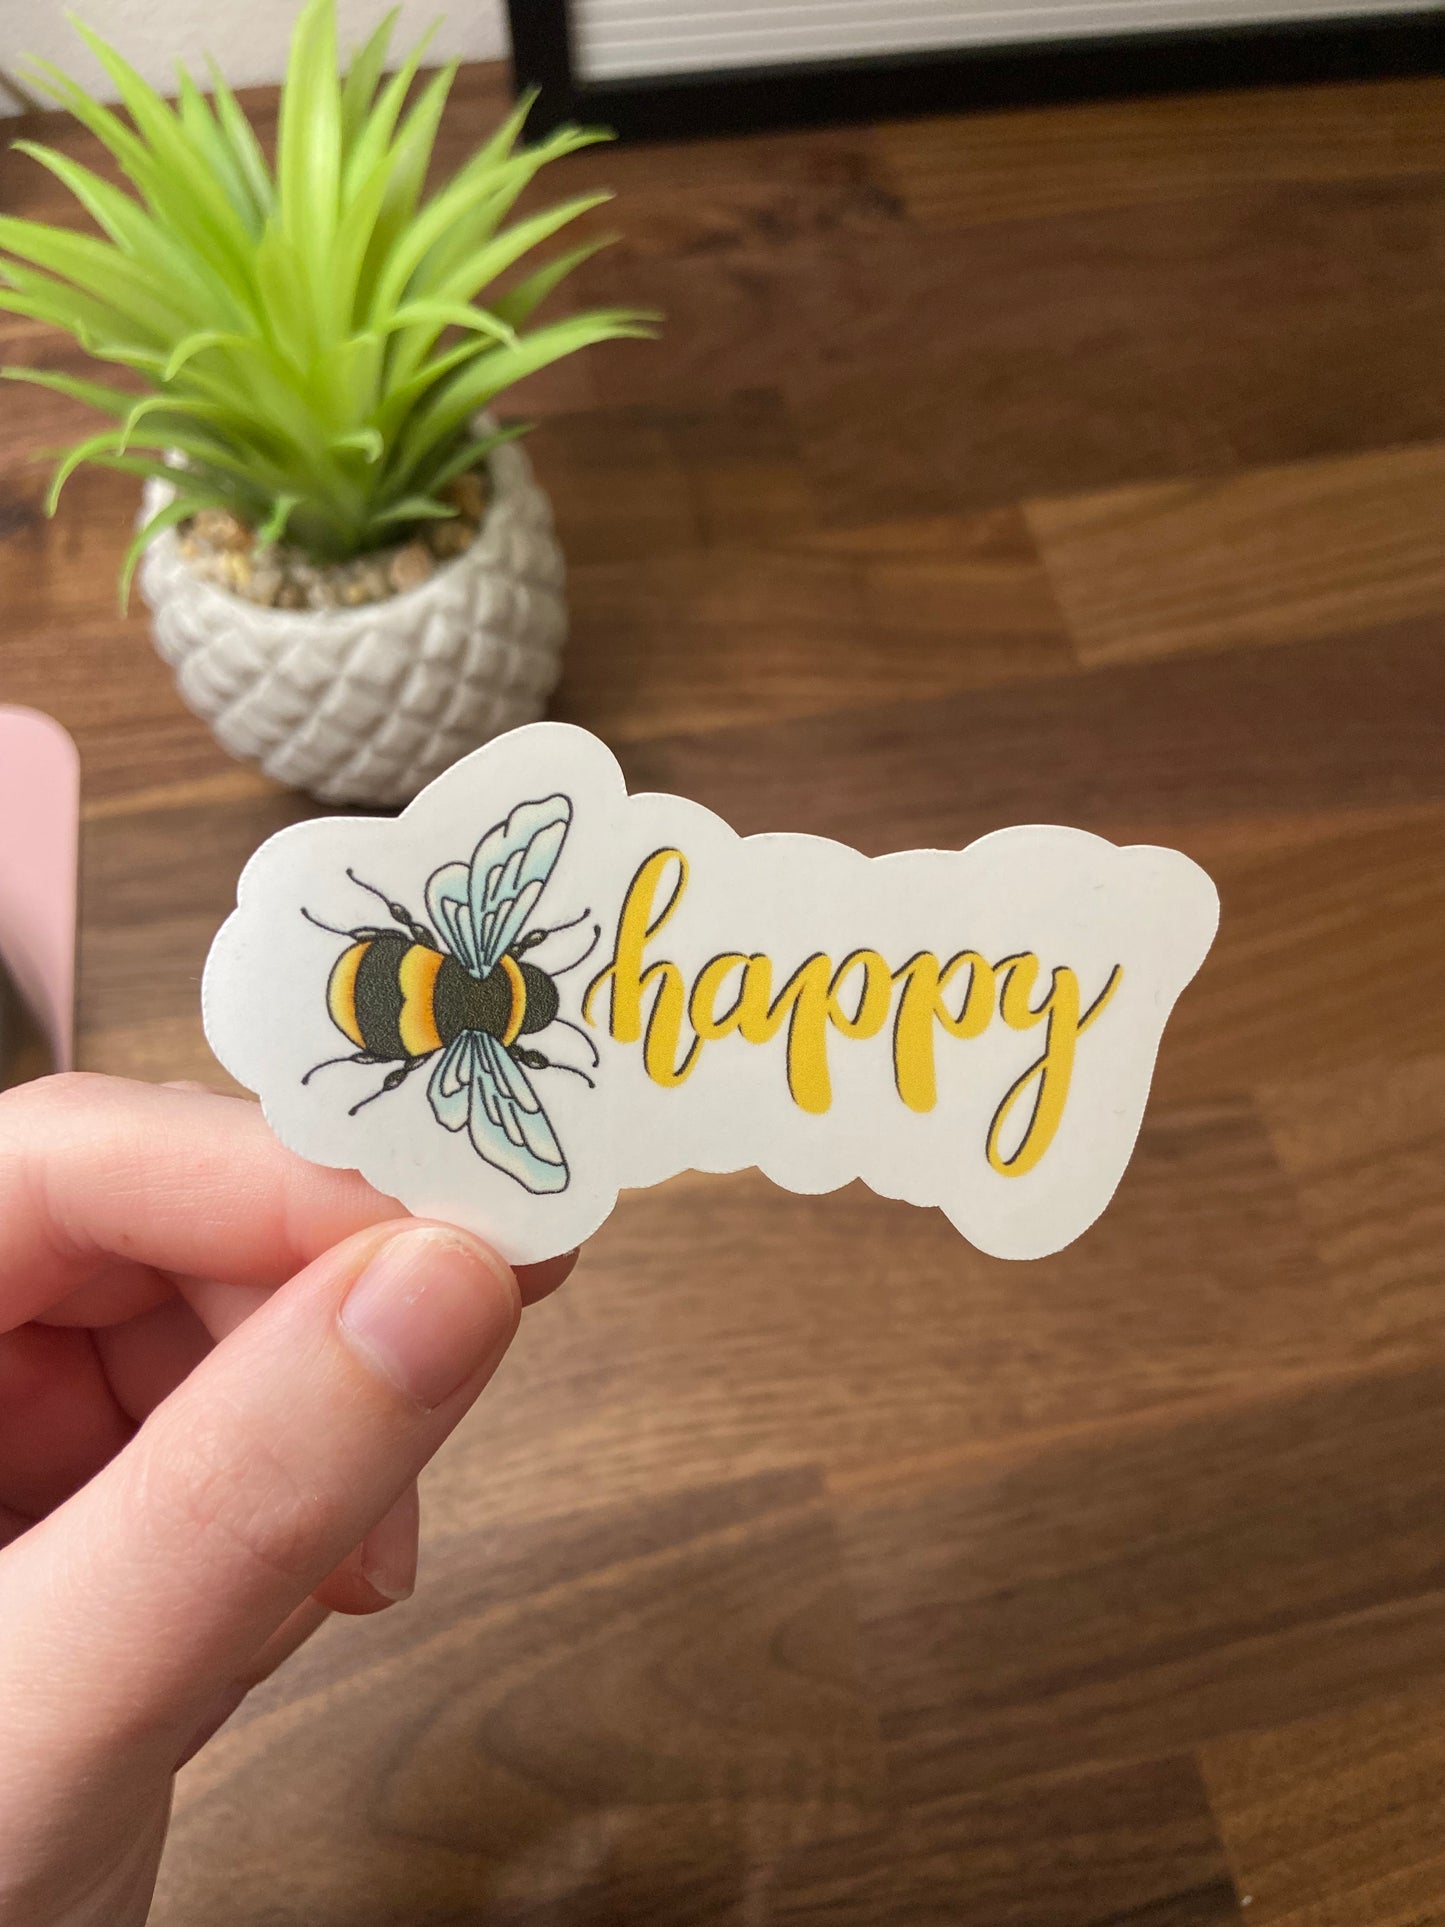 Bee "Happy" sticker